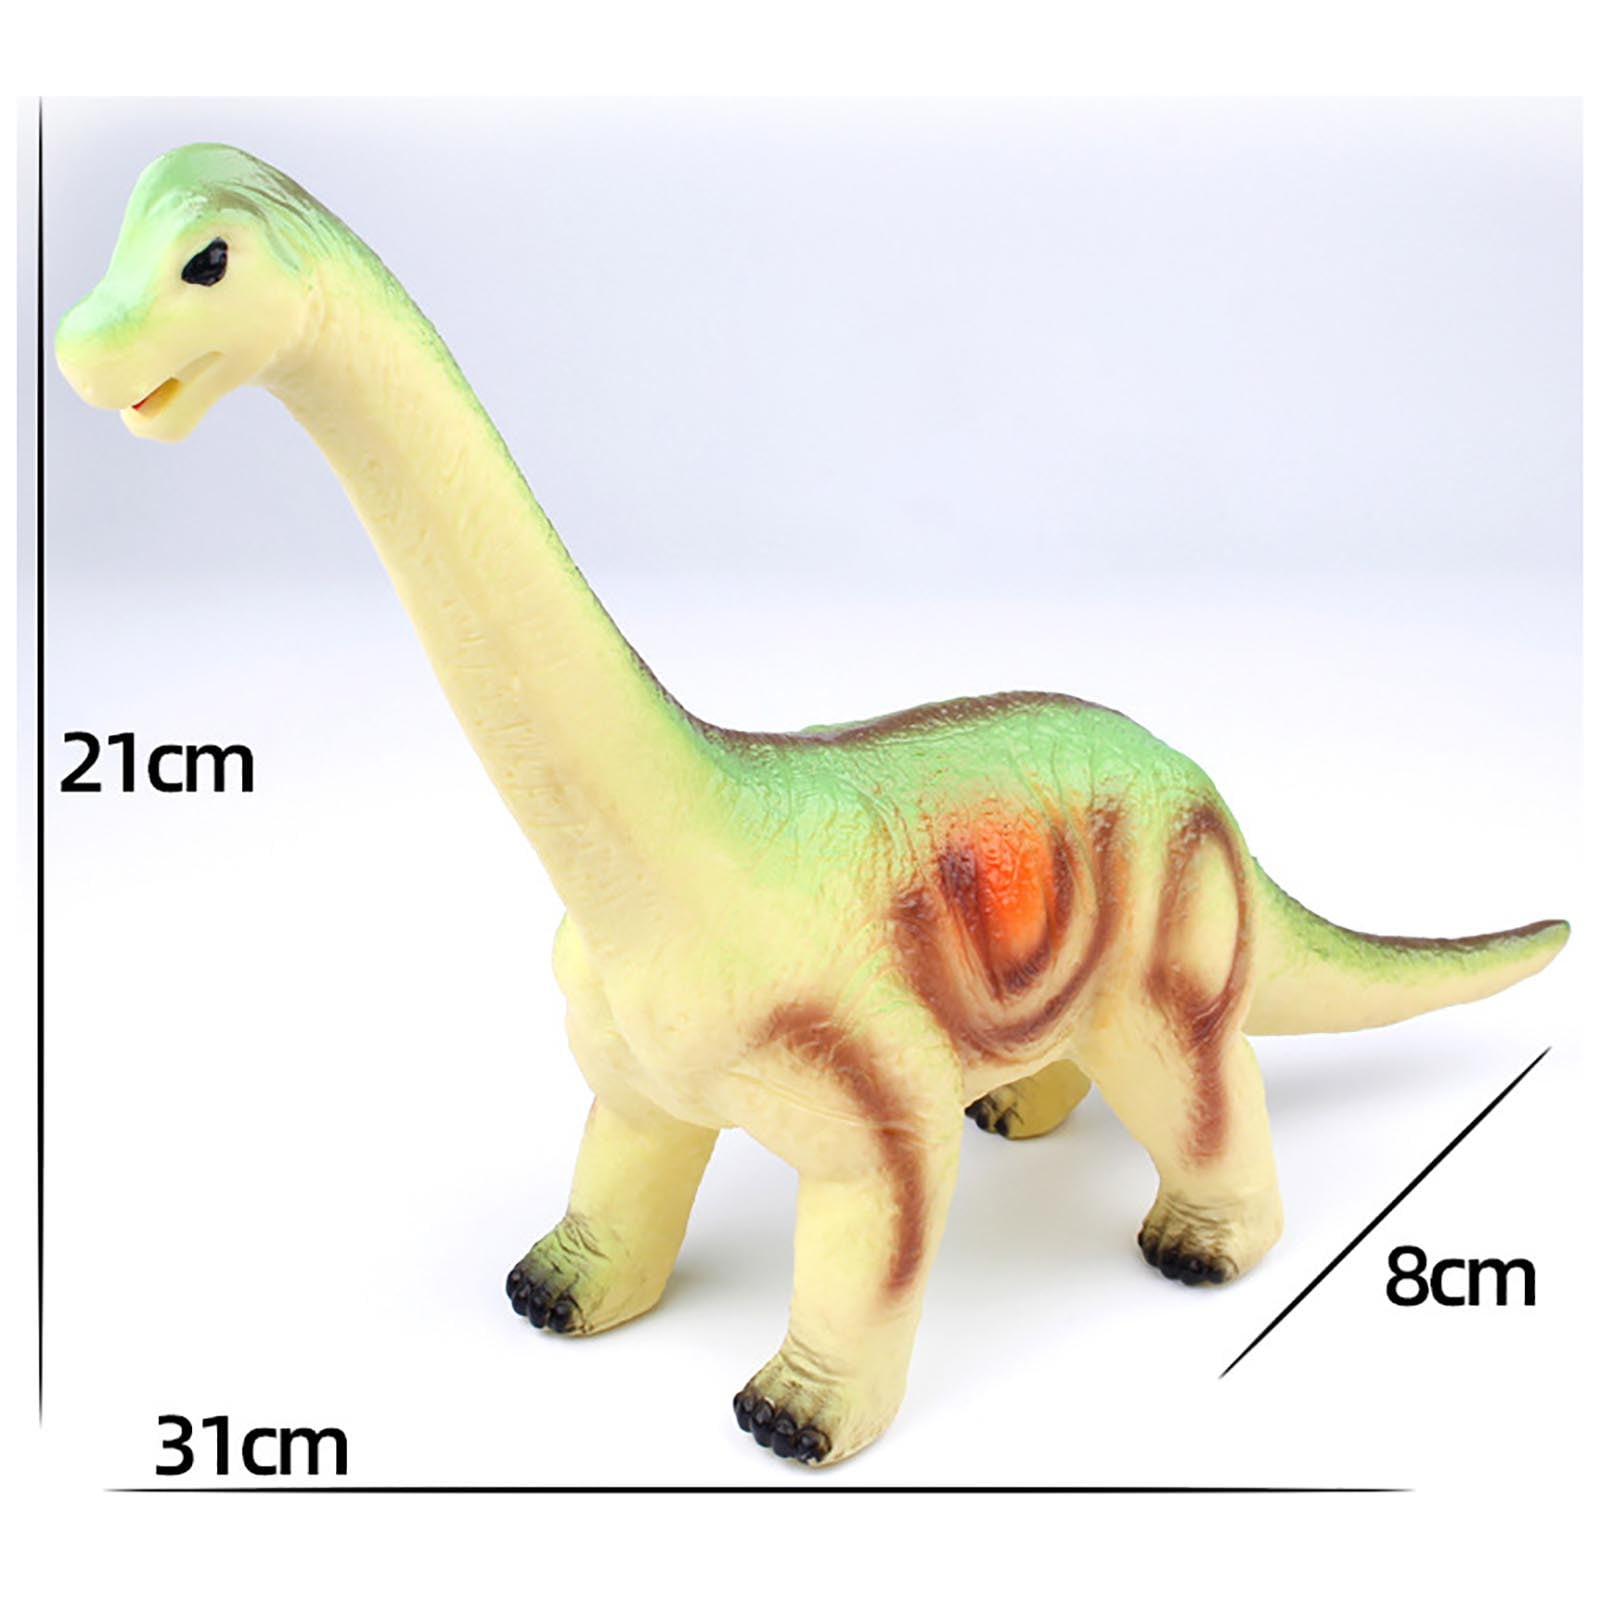 Dinossauro - 31cm